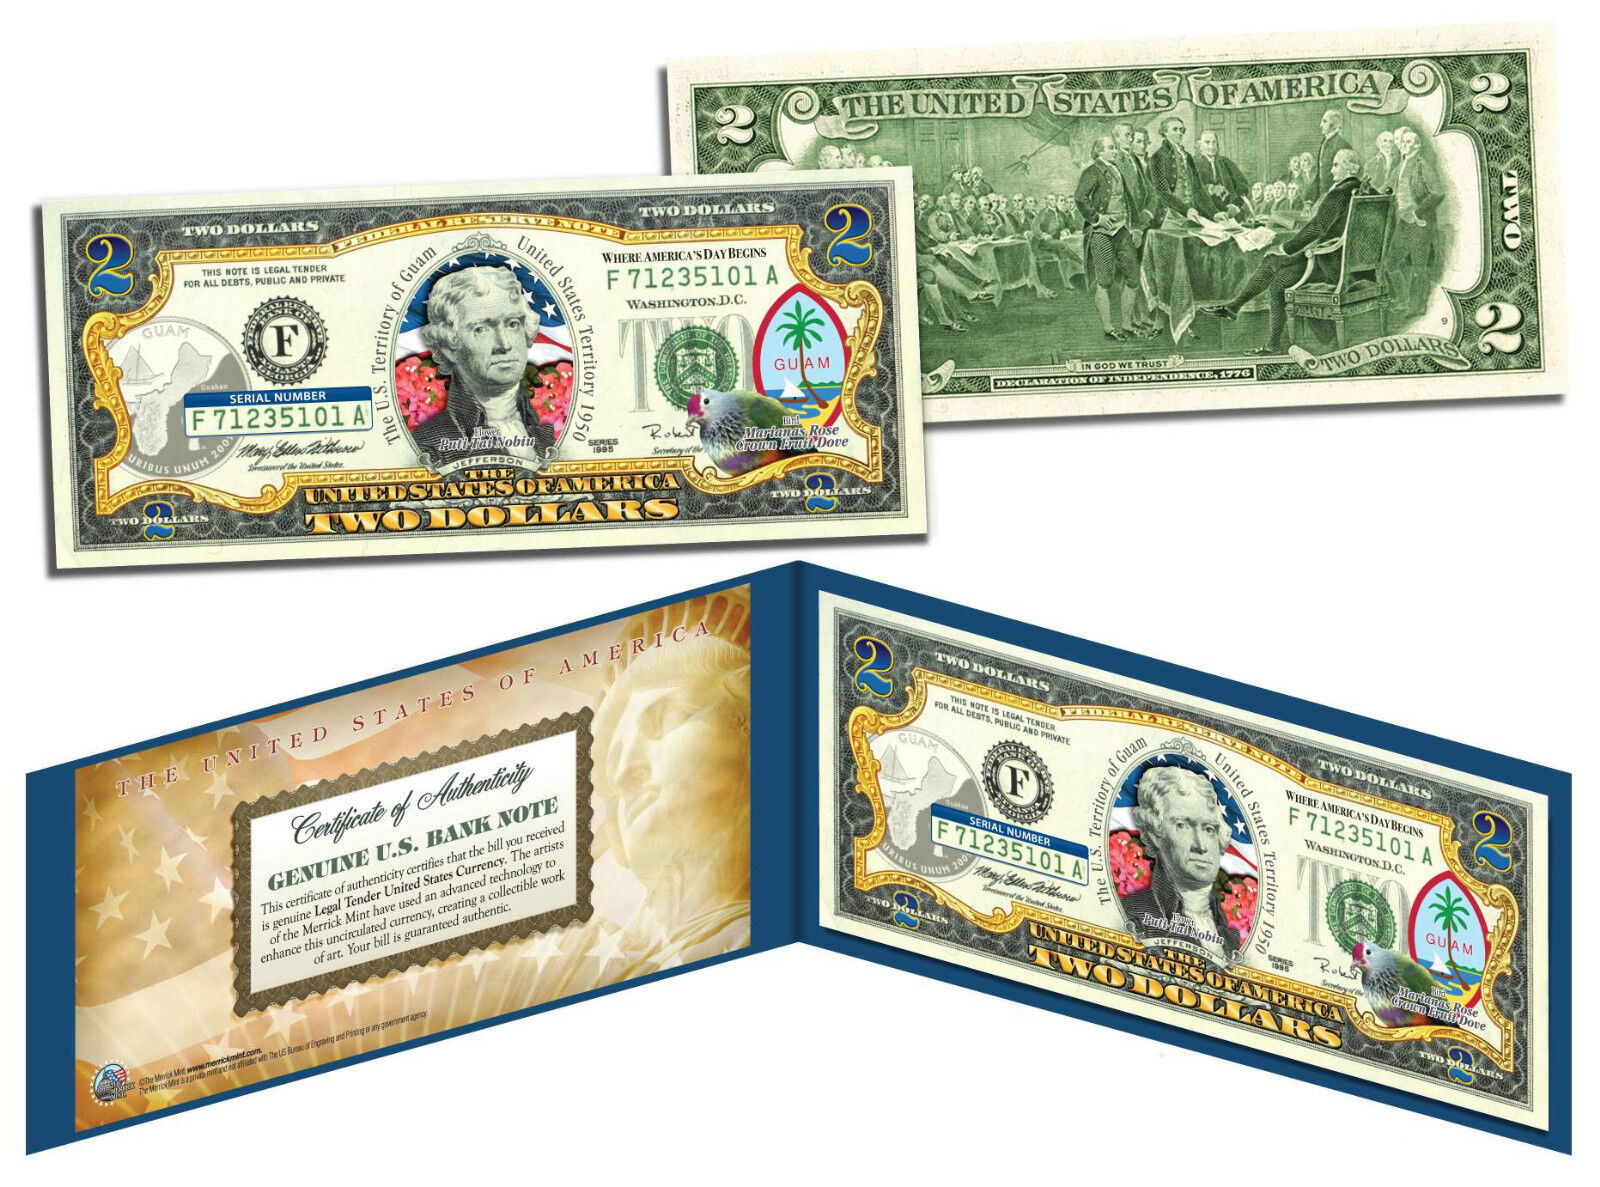 GUAM Statehood $2 Two-Dollar Colorized U.S. Bill - Genuine Legal Tender Currency